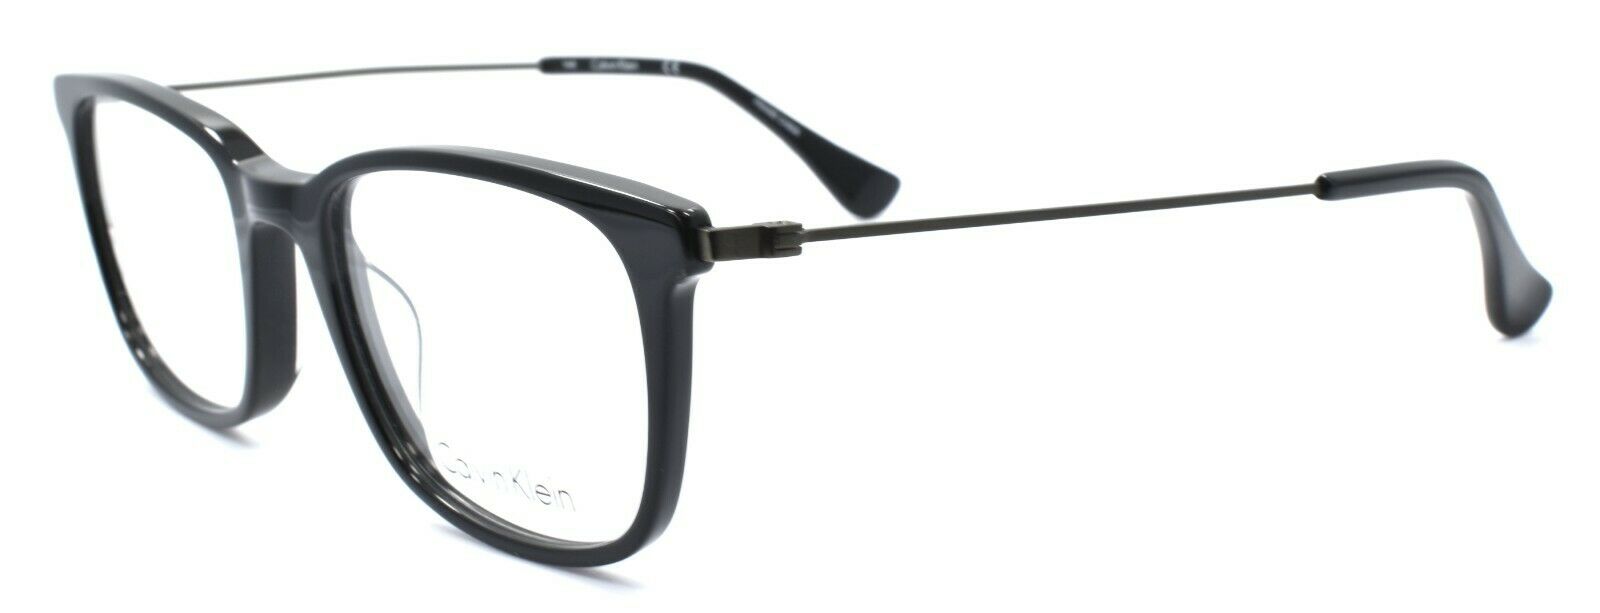 1-Calvin Klein CK5929 001 Eyeglasses Frames 51-19-140 Black-612608928077-IKSpecs